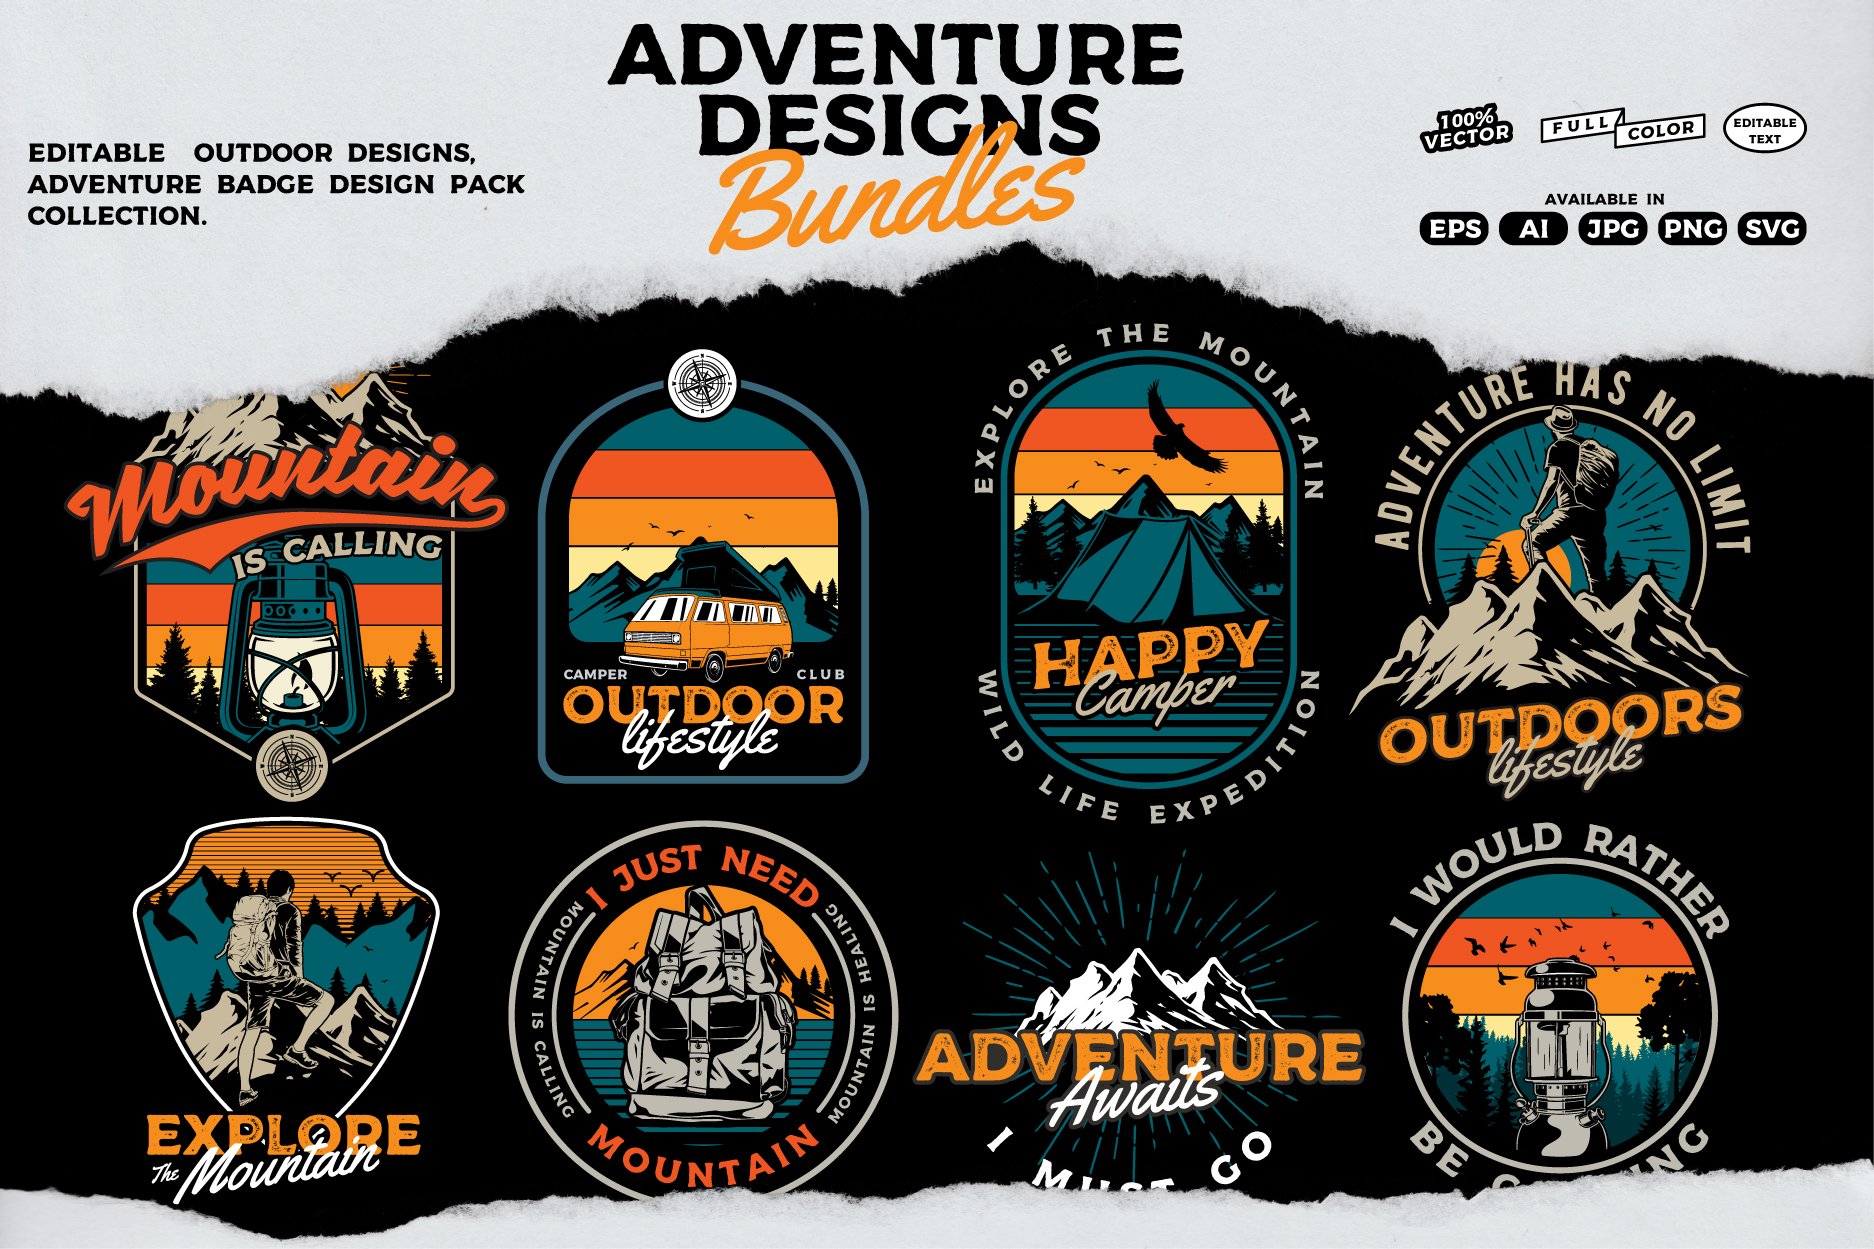 Adventure outdoor designs bundles, cover image.